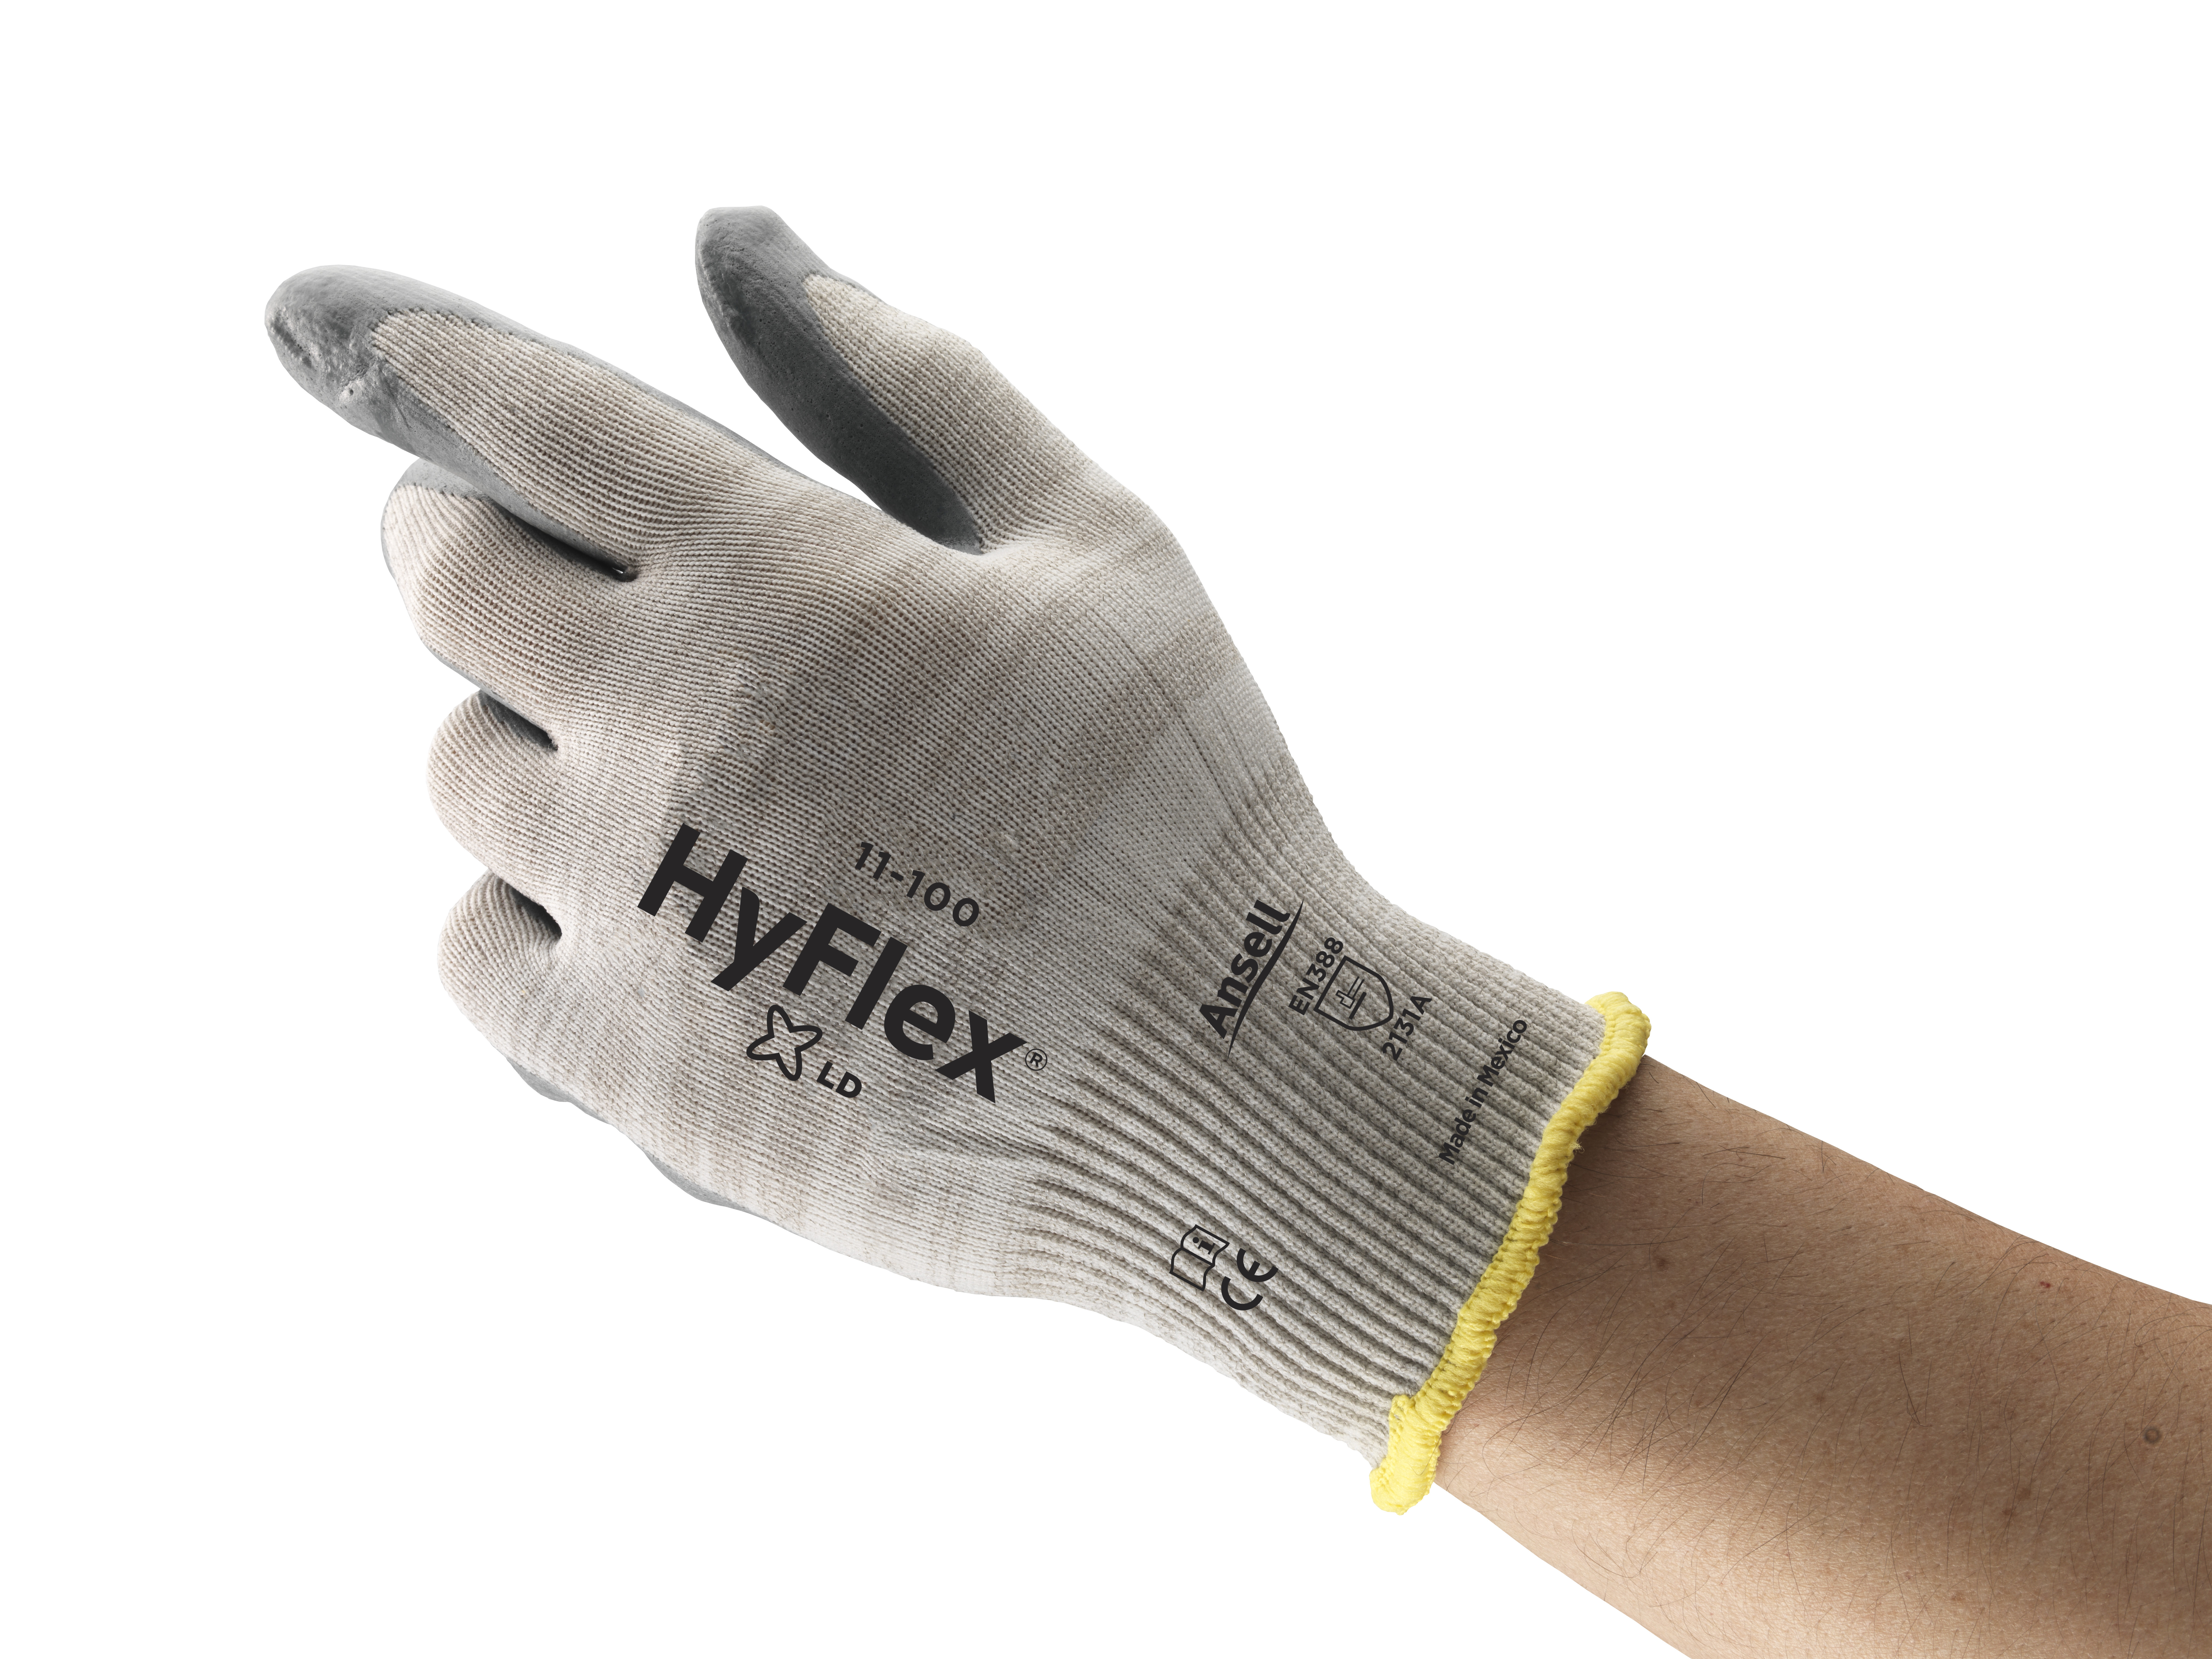 Ansell - Handschuh HyFlex® 11-100